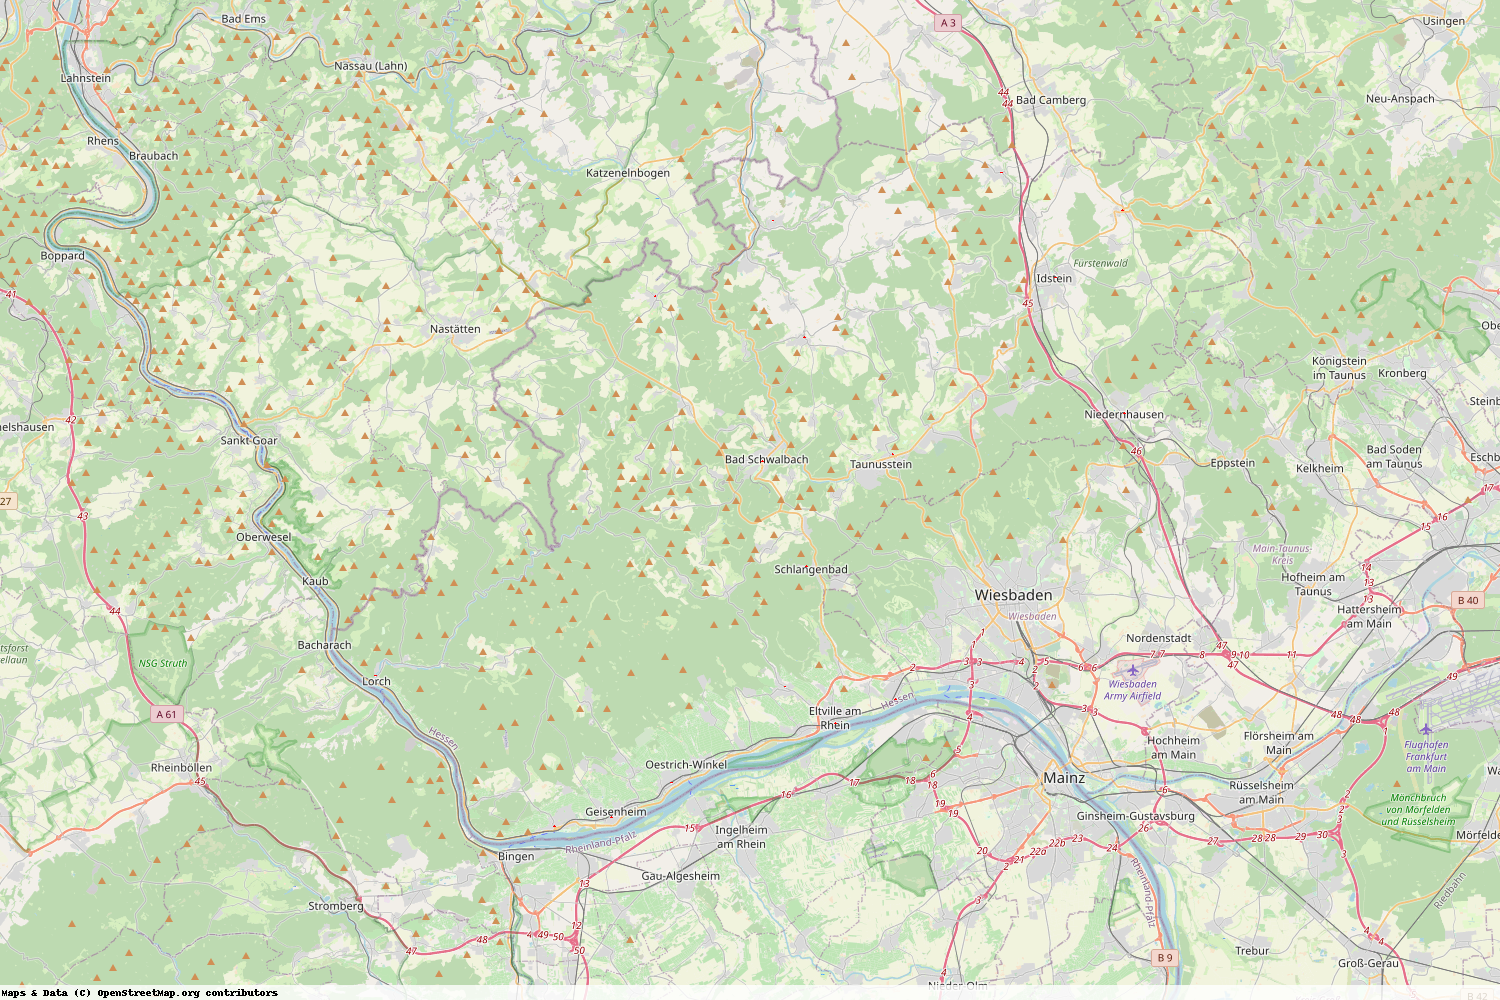 Ist gerade Stromausfall in Hessen - Rheingau-Taunus-Kreis?